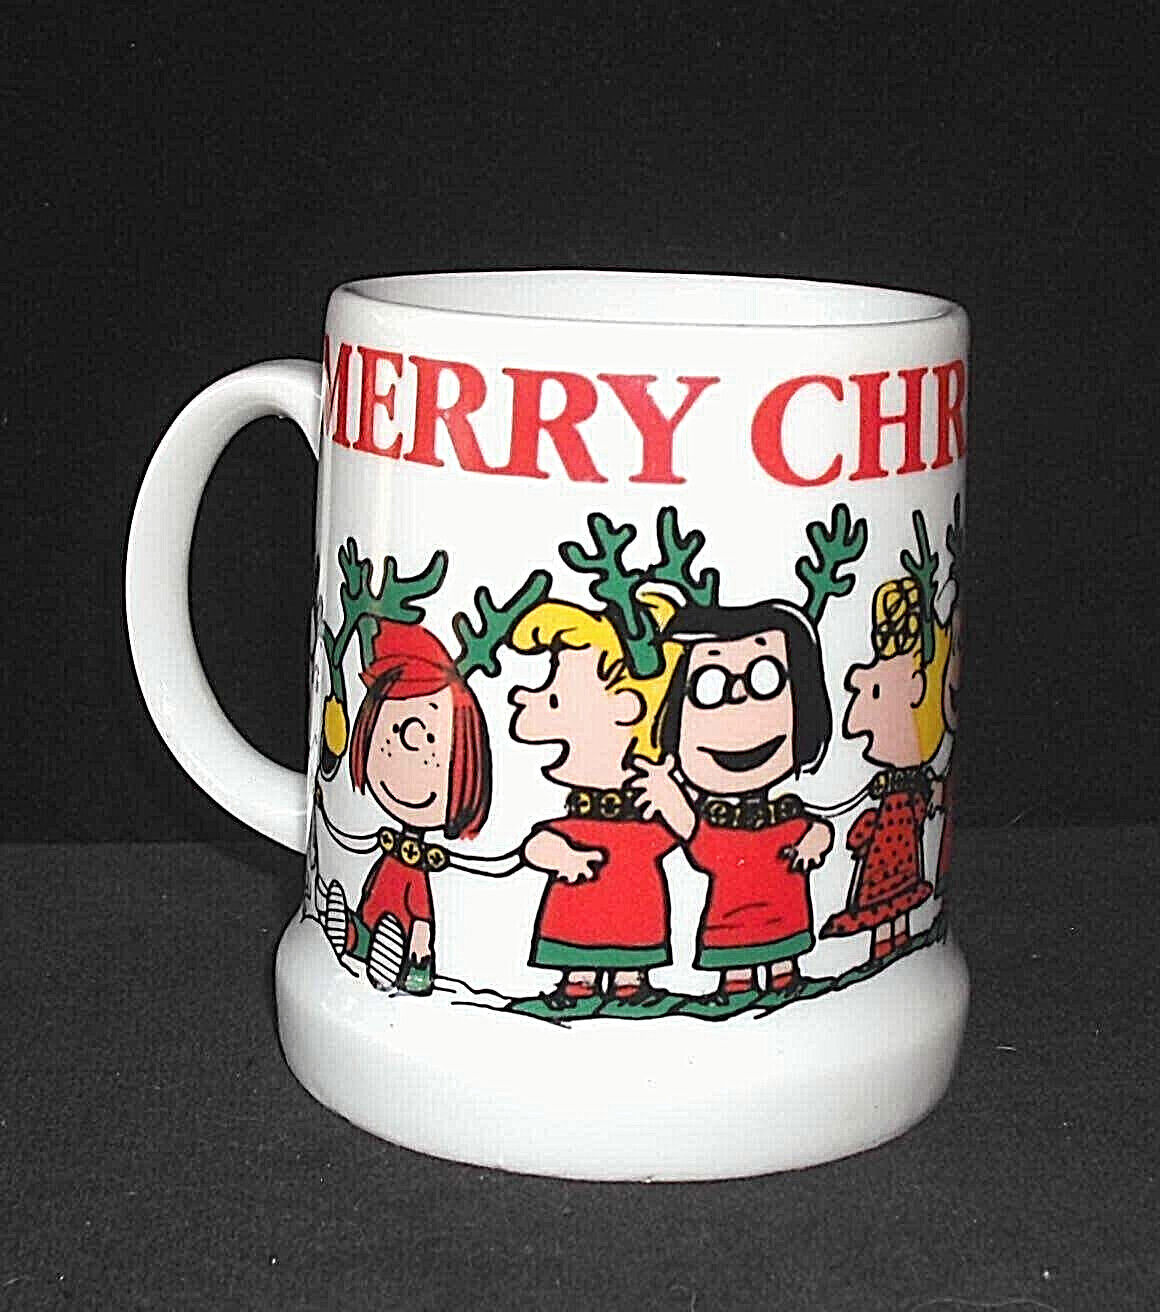 Vintage 1981 Merry Christmas mug cup Snoopy Peanuts Gang